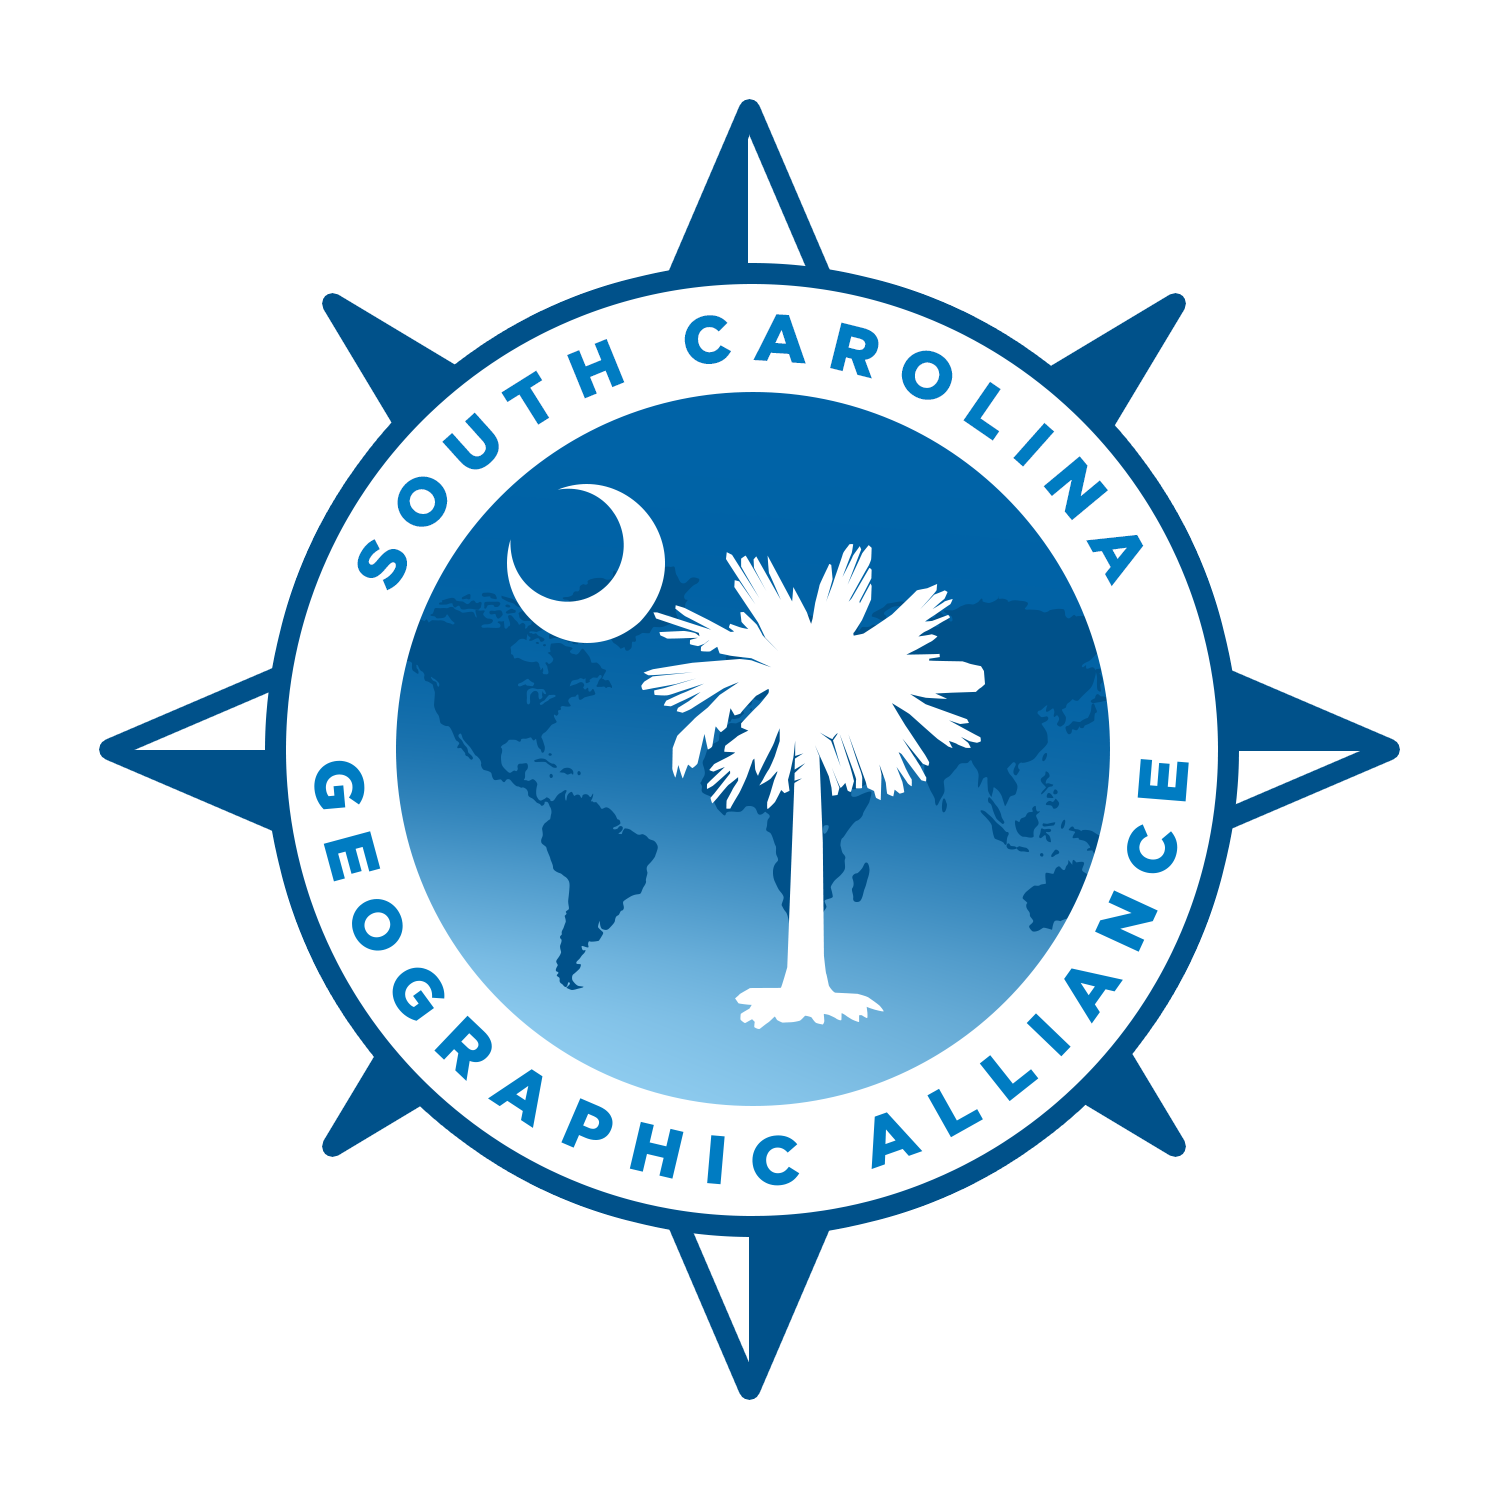 South Carolina Geographic Alliance